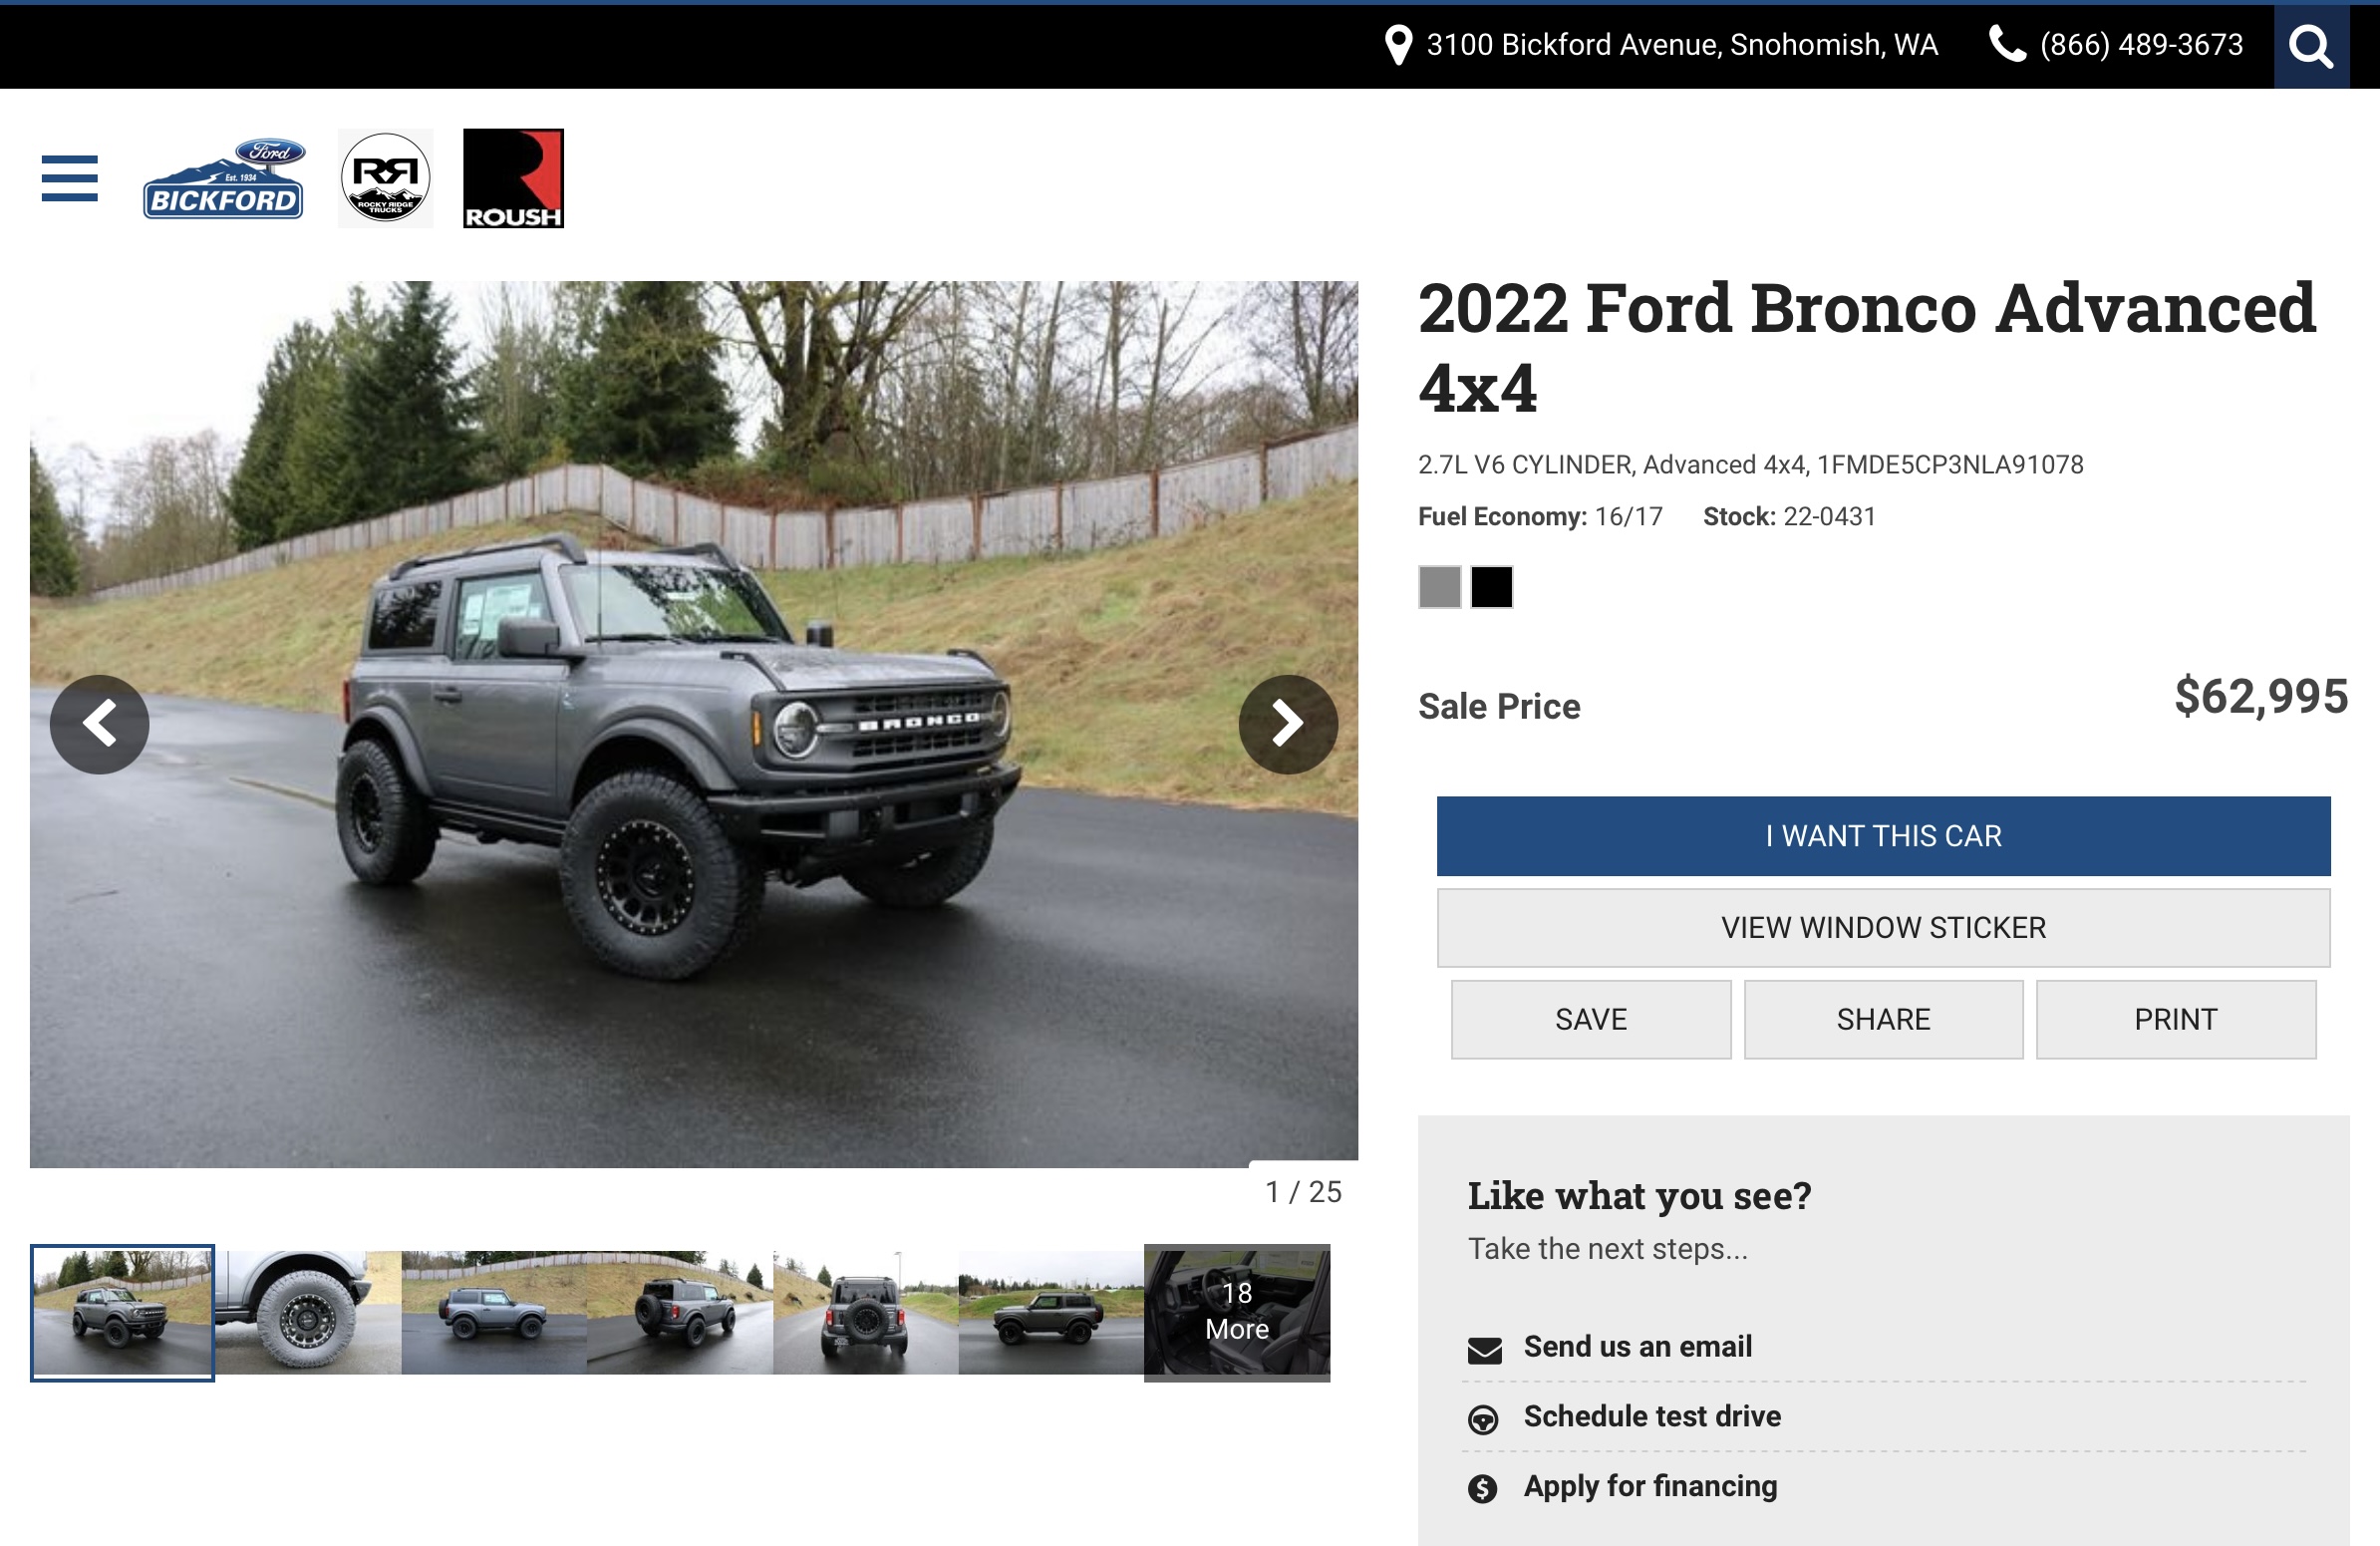 Ford Bronco Price Gouging Still ! B6EA4747-D8B7-4DEC-A8FC-25A685474B92